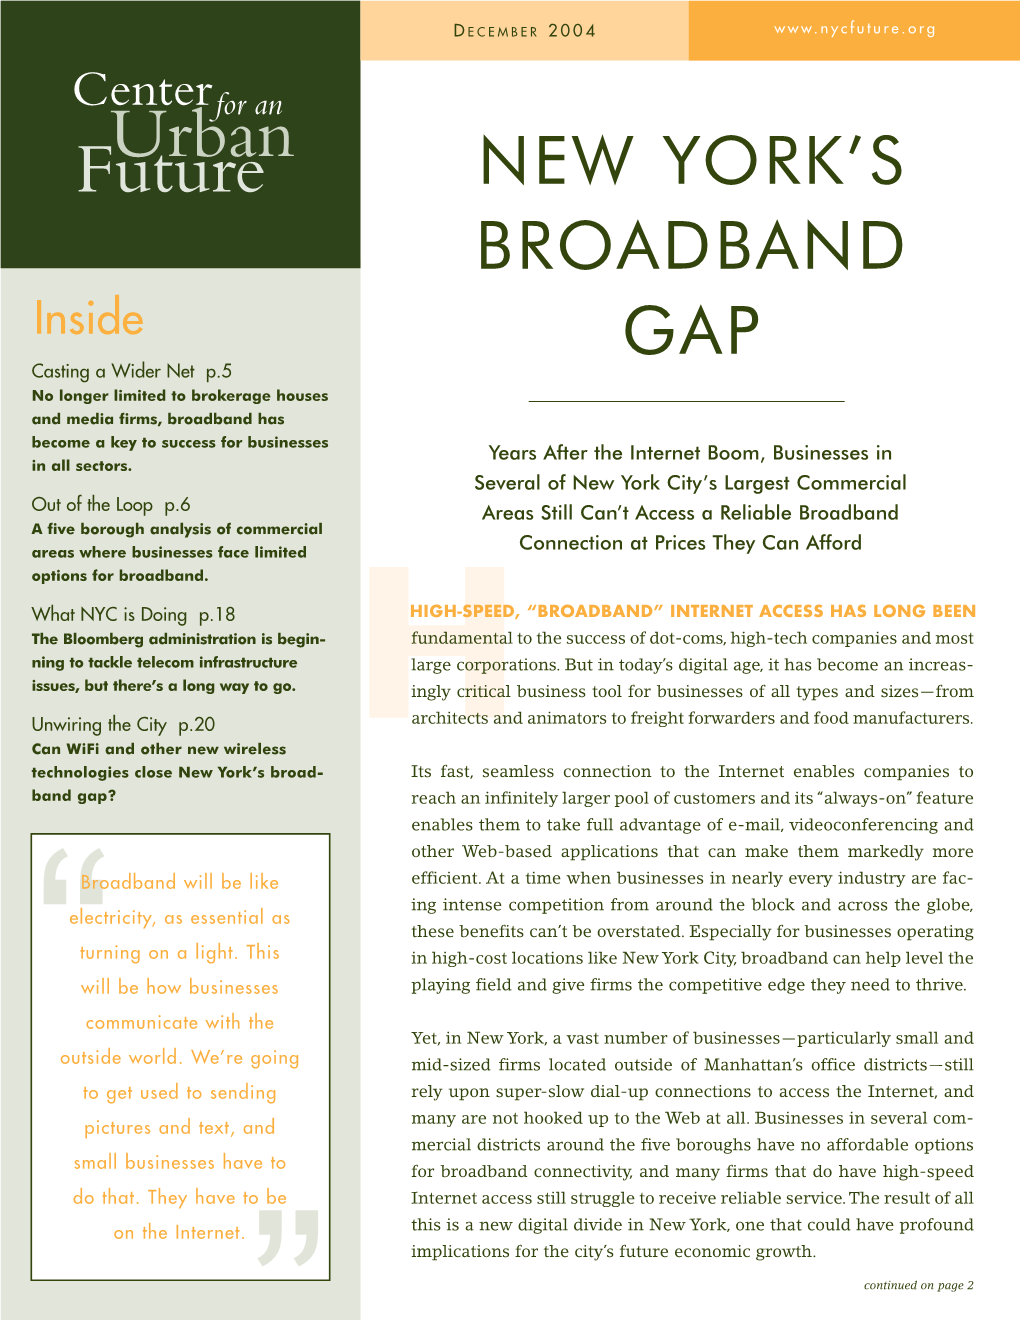 New York's Broadband